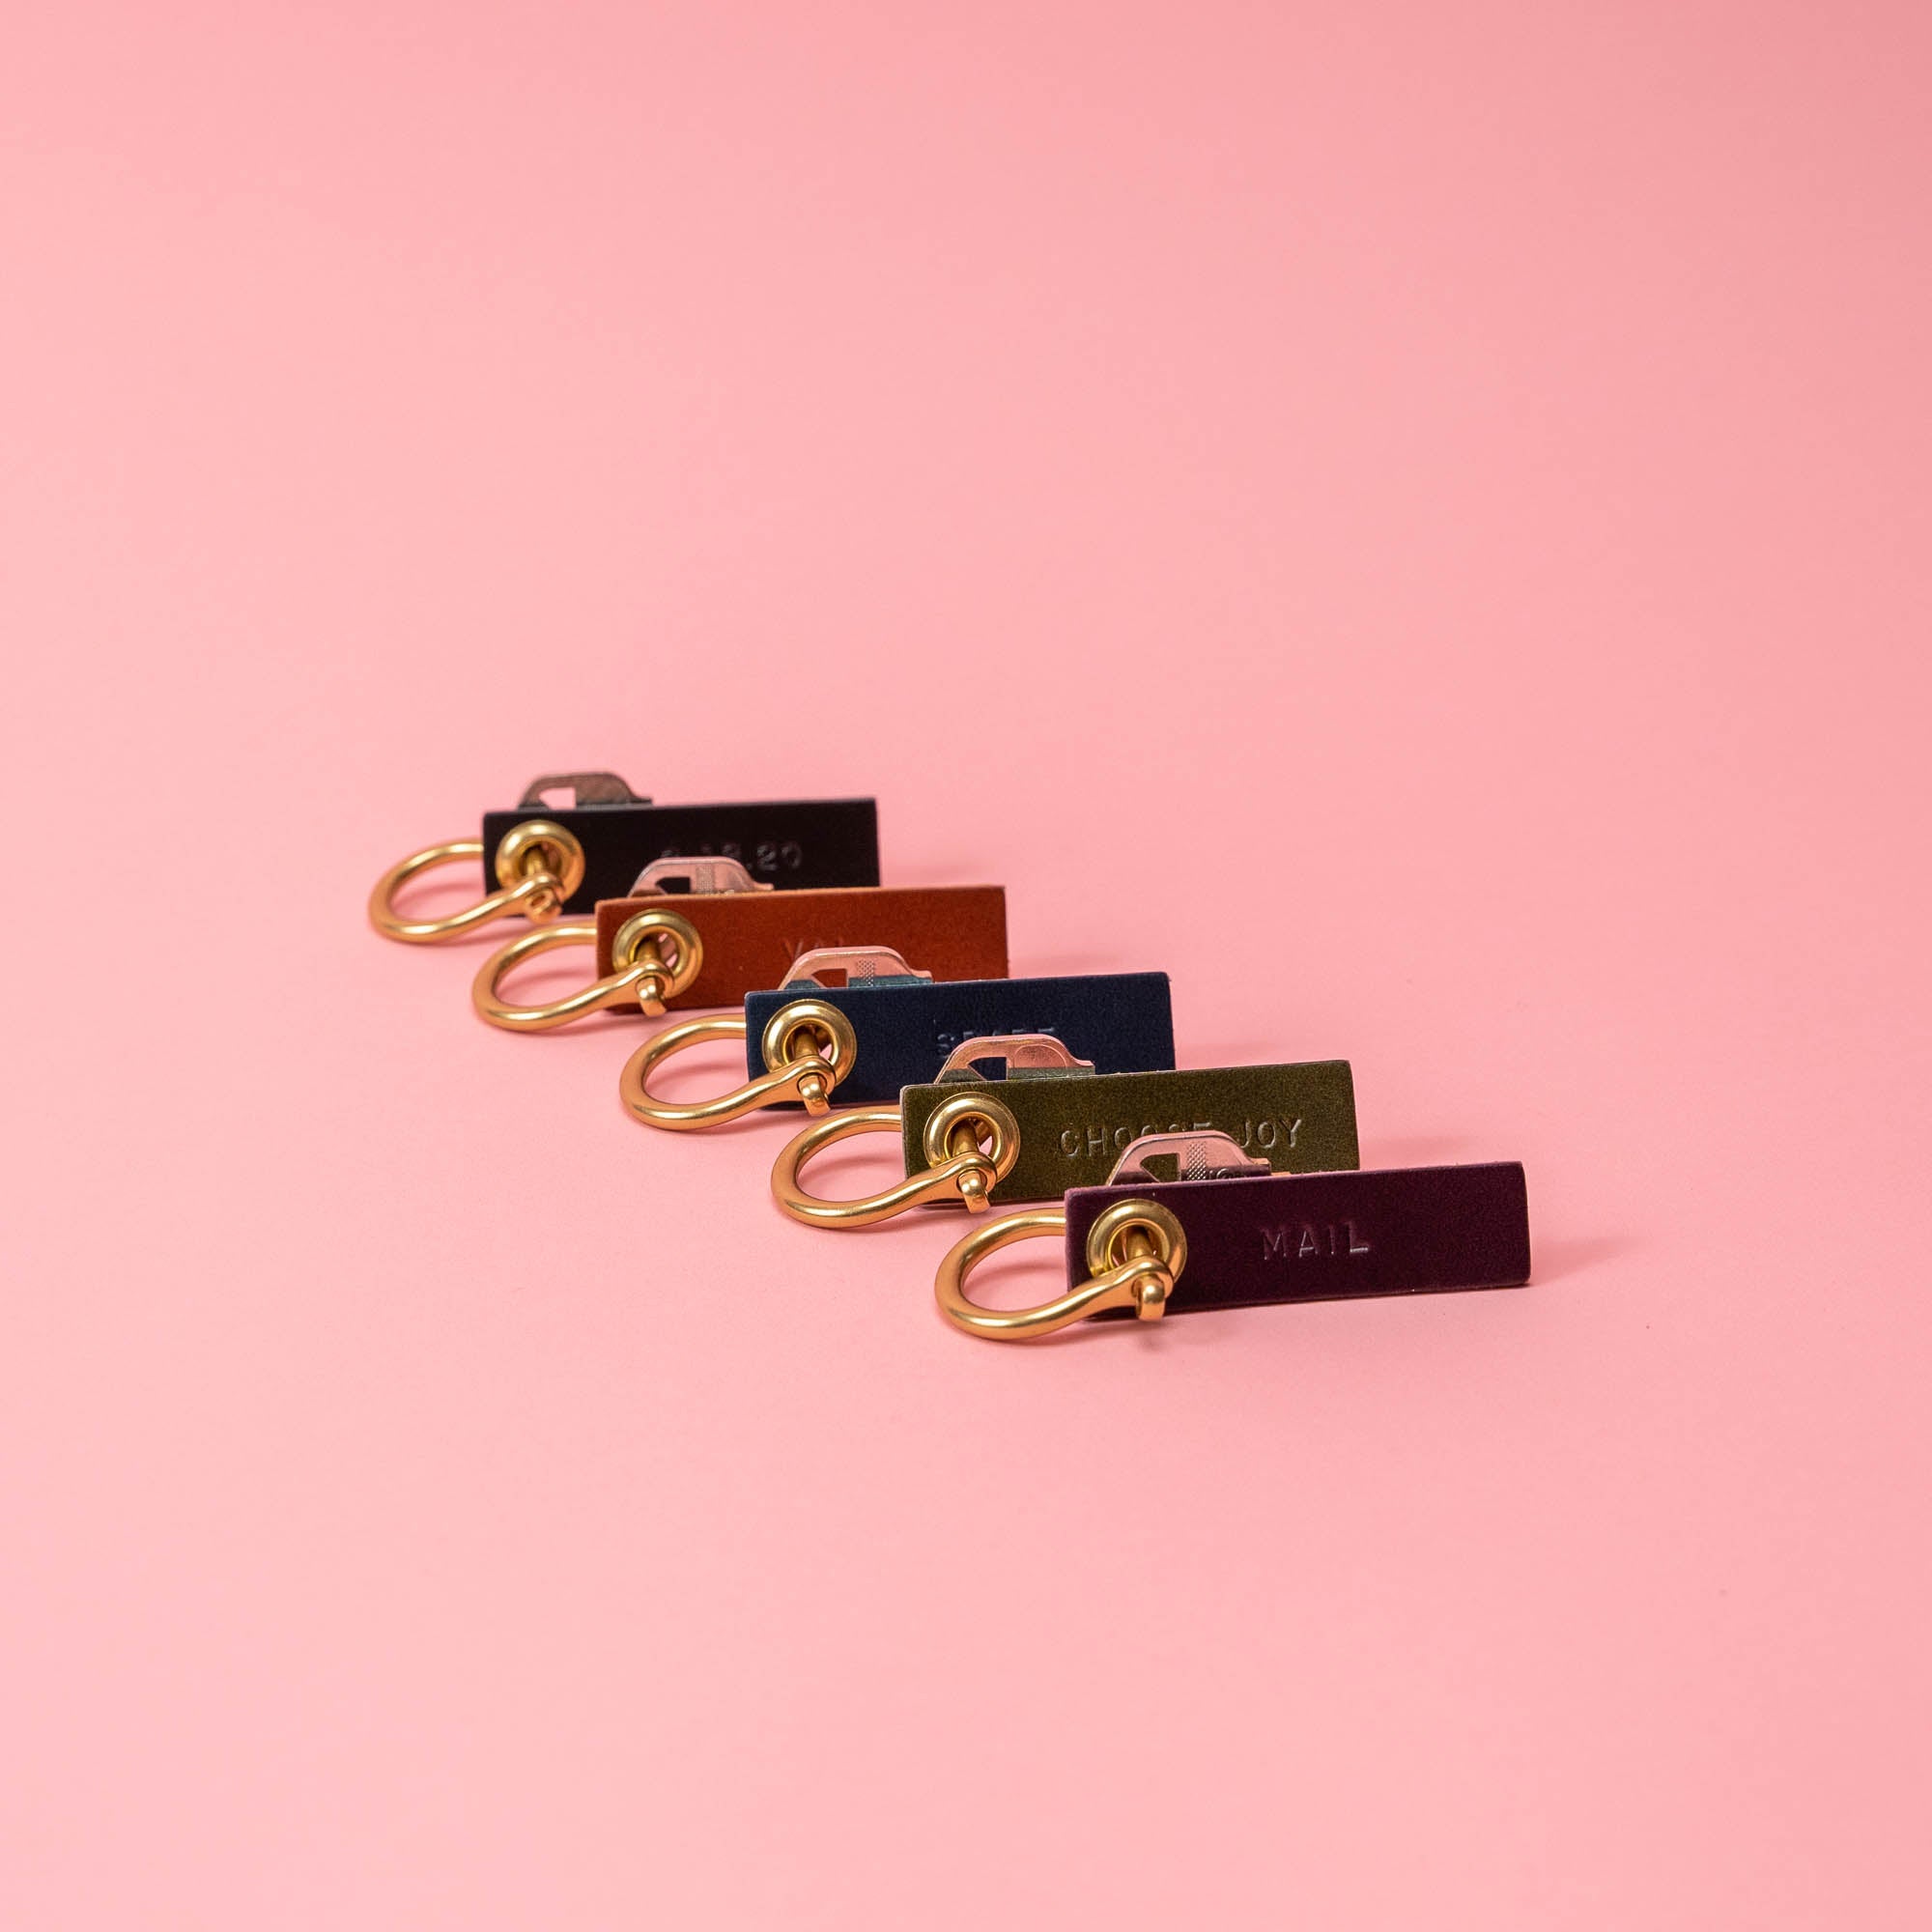 The Wristlet Keychain - Black – Fawn Design